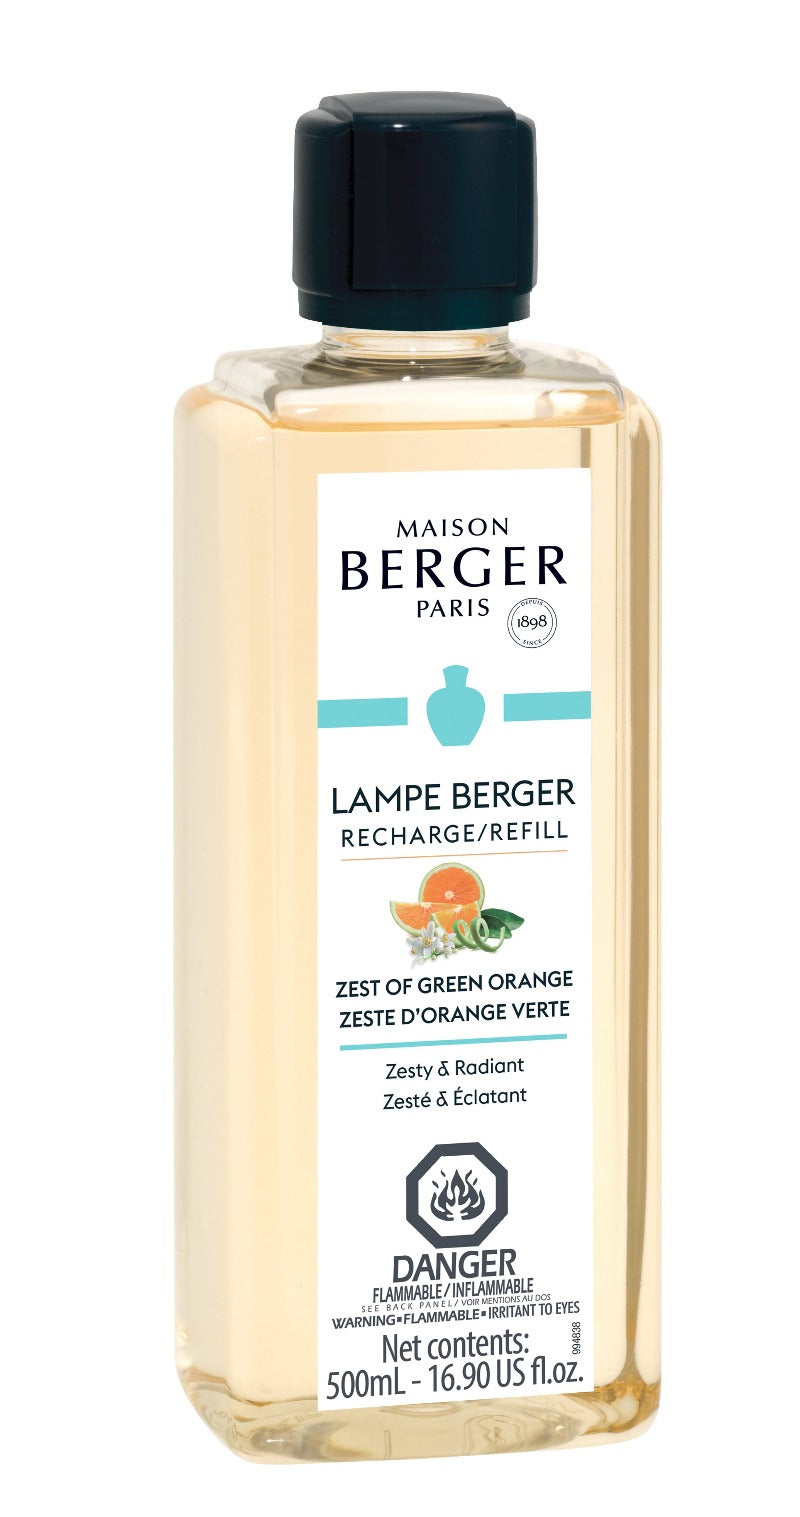 Maison Berger Zest of Green Orange 500ml Refill for Lampe Berger